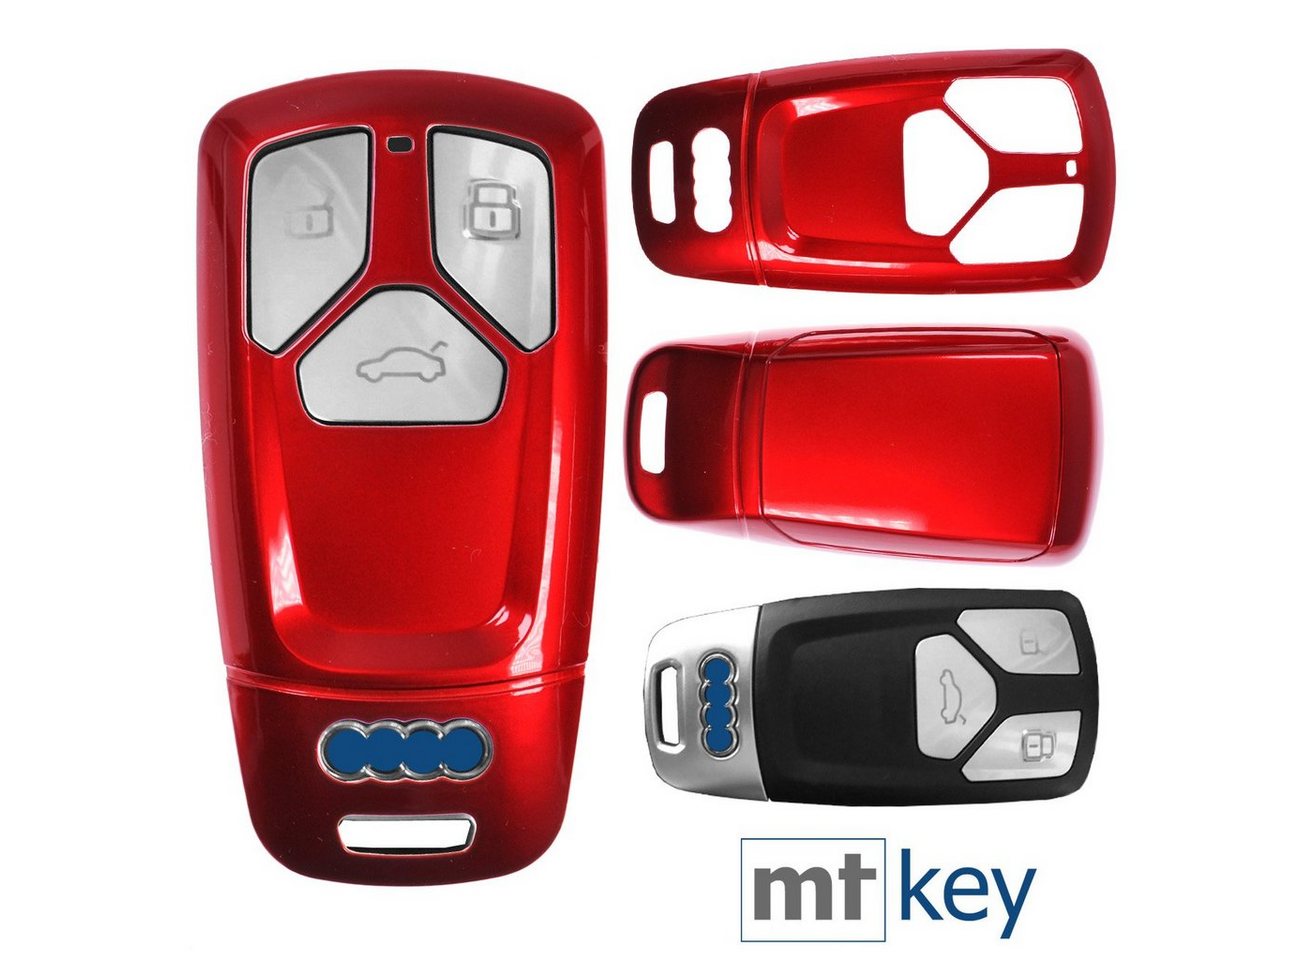 mt-key Schlüsseltasche Autoschlüssel Hardcover Schutzhülle Metallic Rot, für Audi A4 A5 A6 A7 TT Q2 Q5 Q7 A8 Q8 KEYLESS SMARTKEY von mt-key